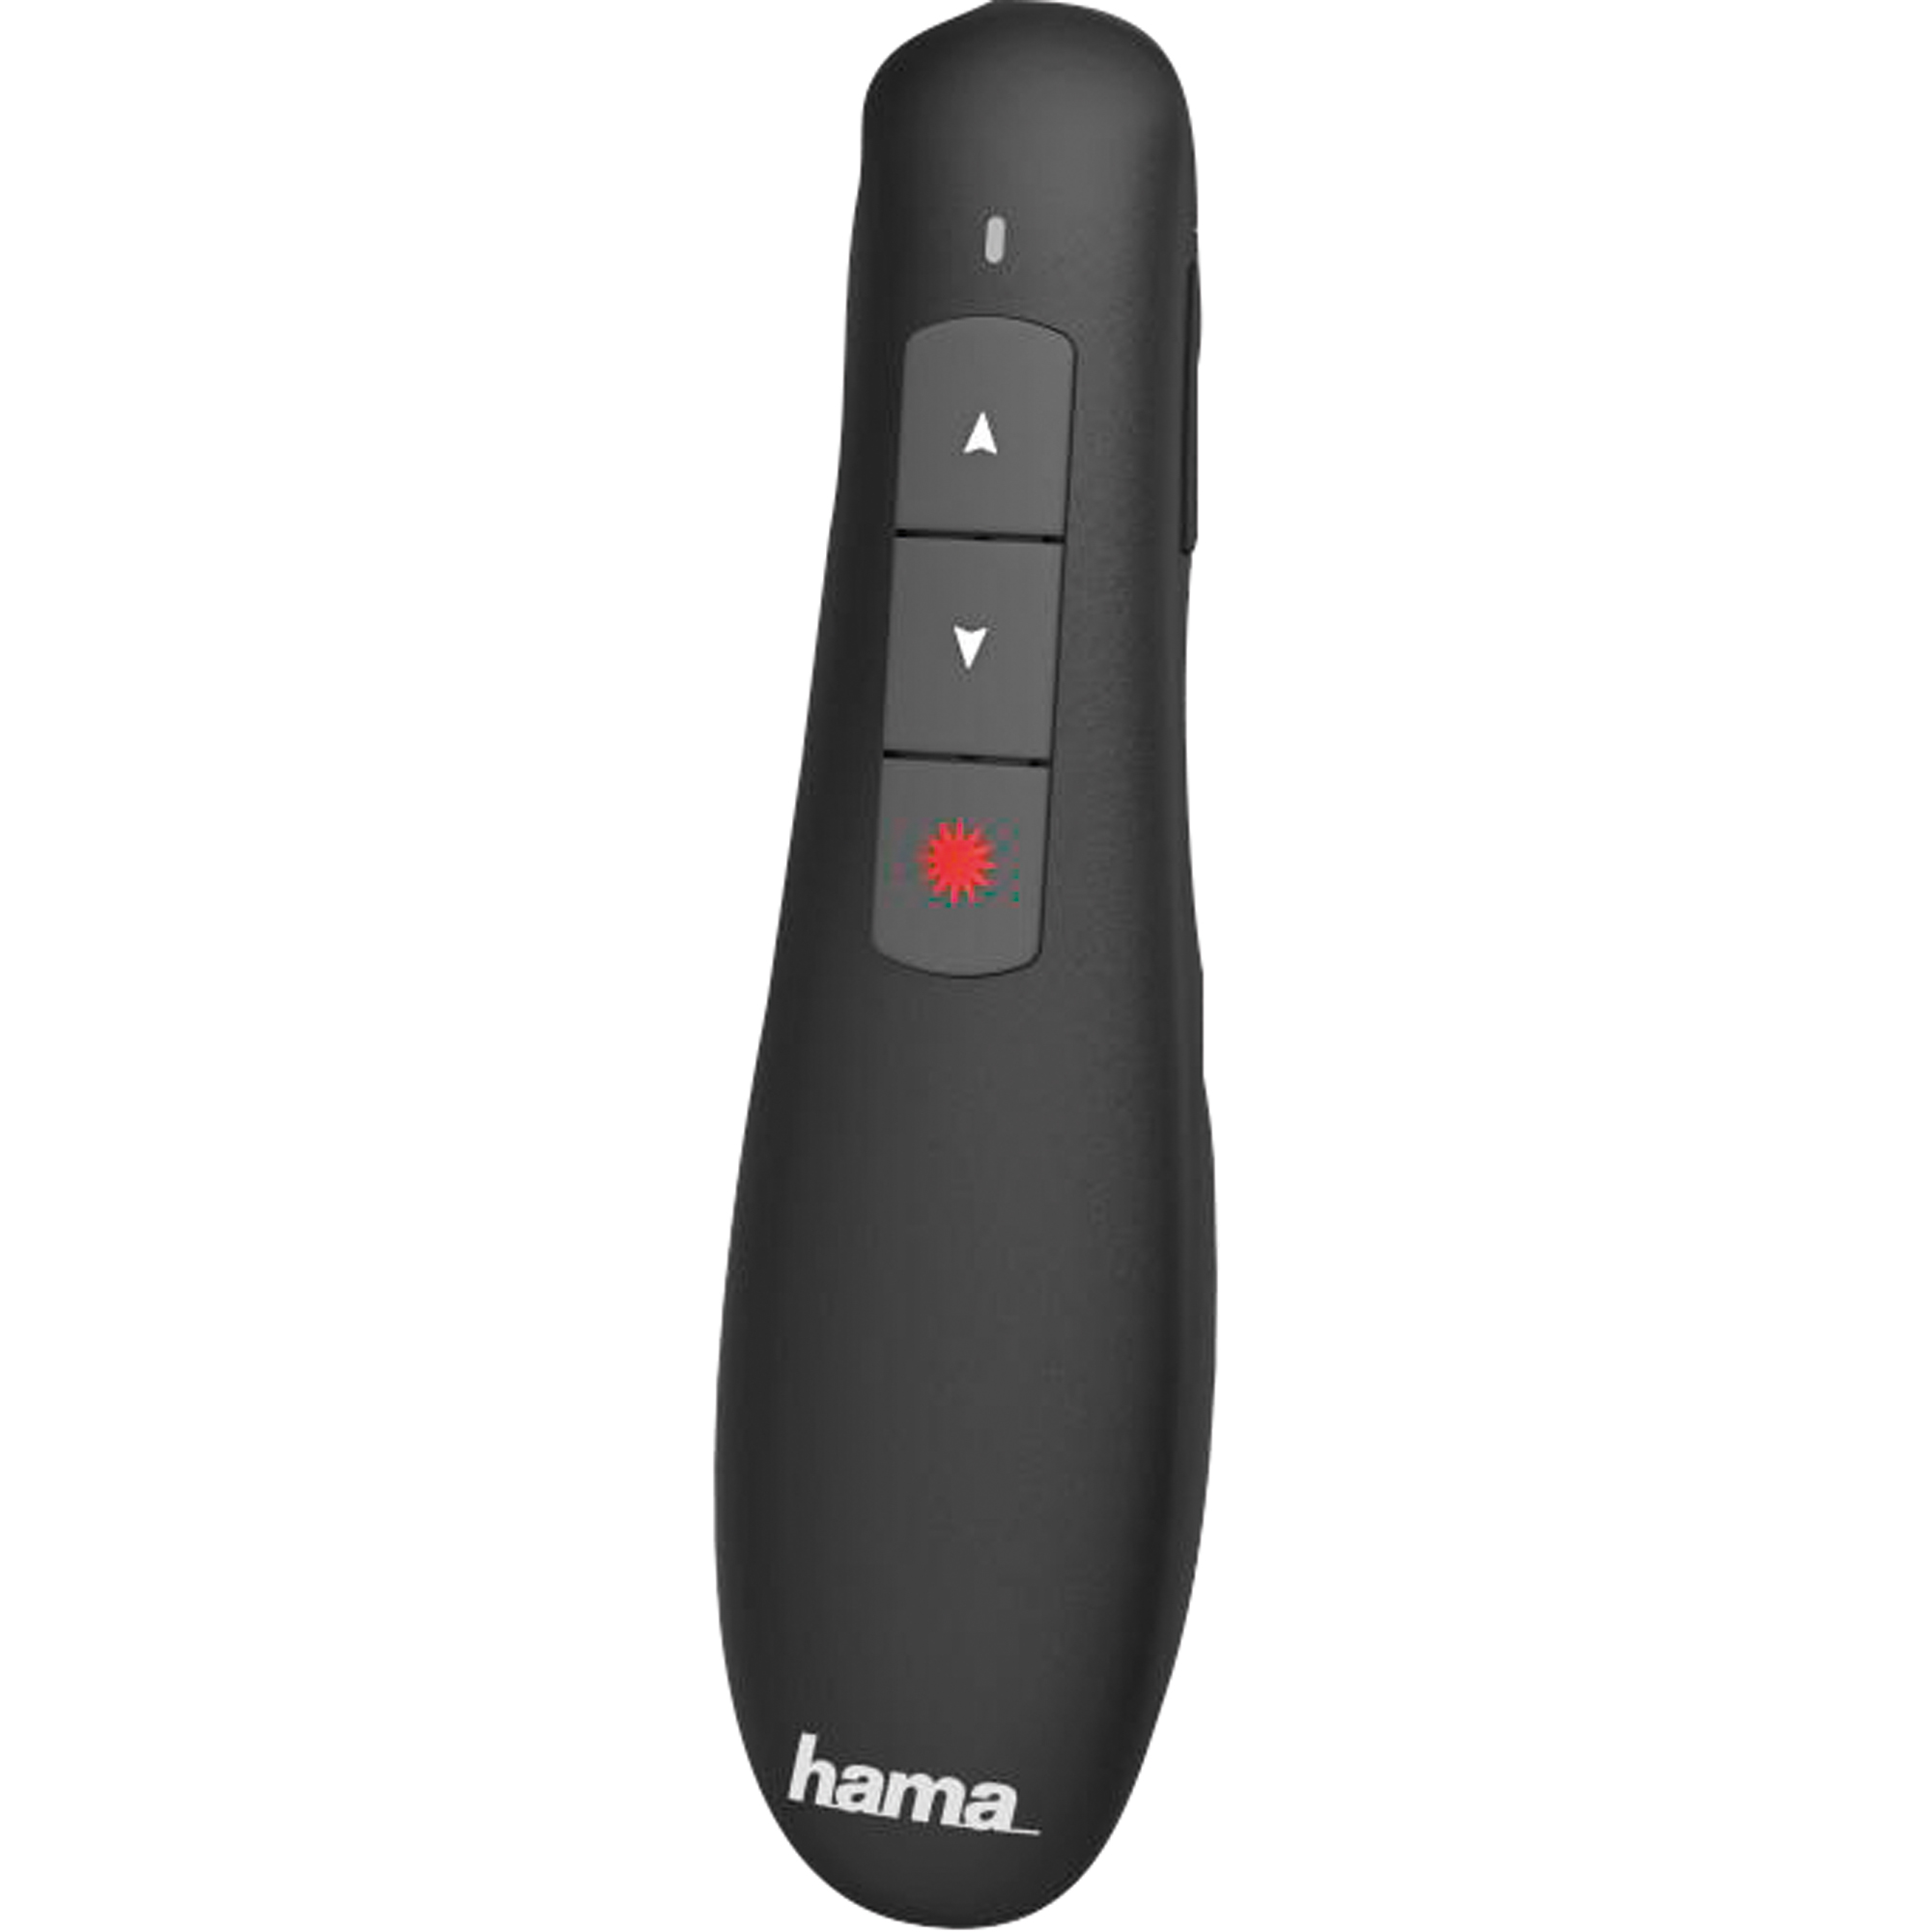 Hama Wireless Presenter X-Pointer